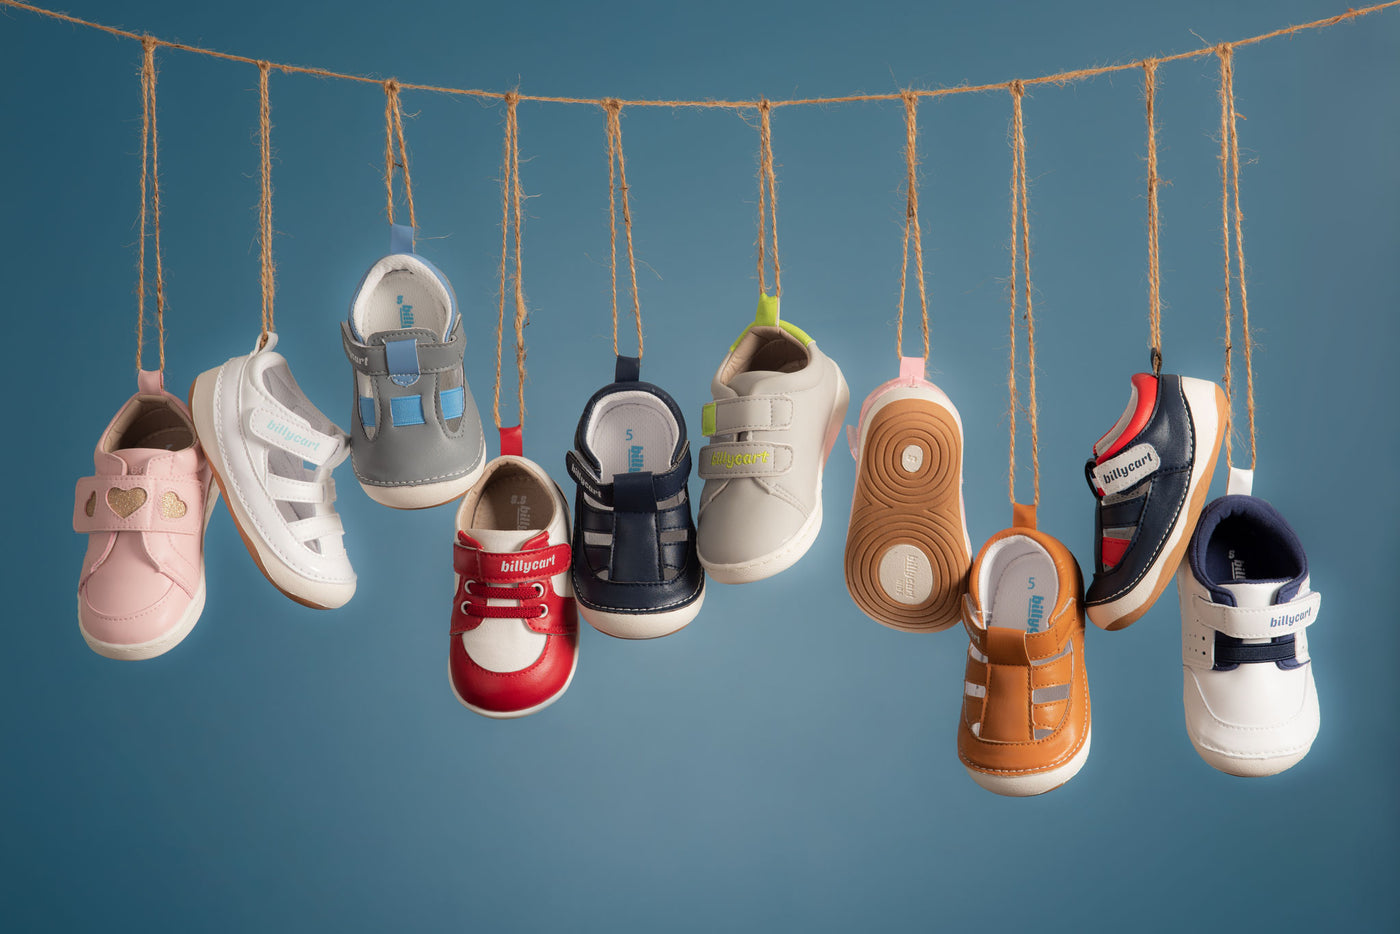 A collection of first walker shoes from Australian children’s shoe brand Billycart Kids